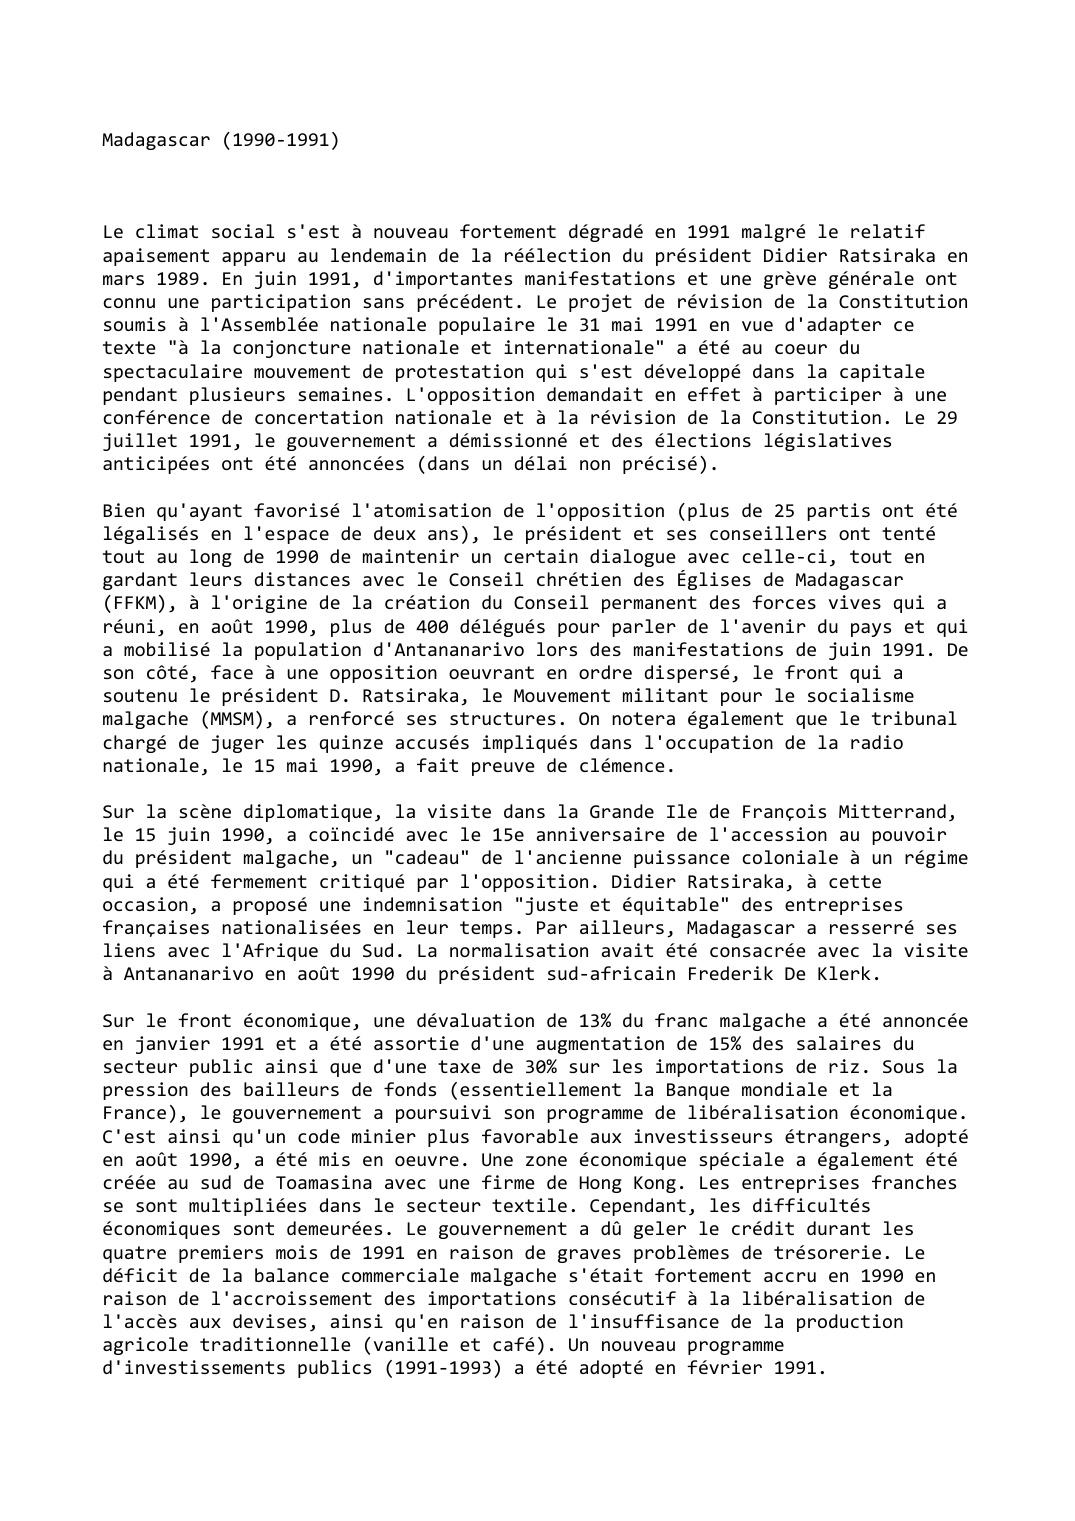 Prévisualisation du document Madagascar (1990-1991)